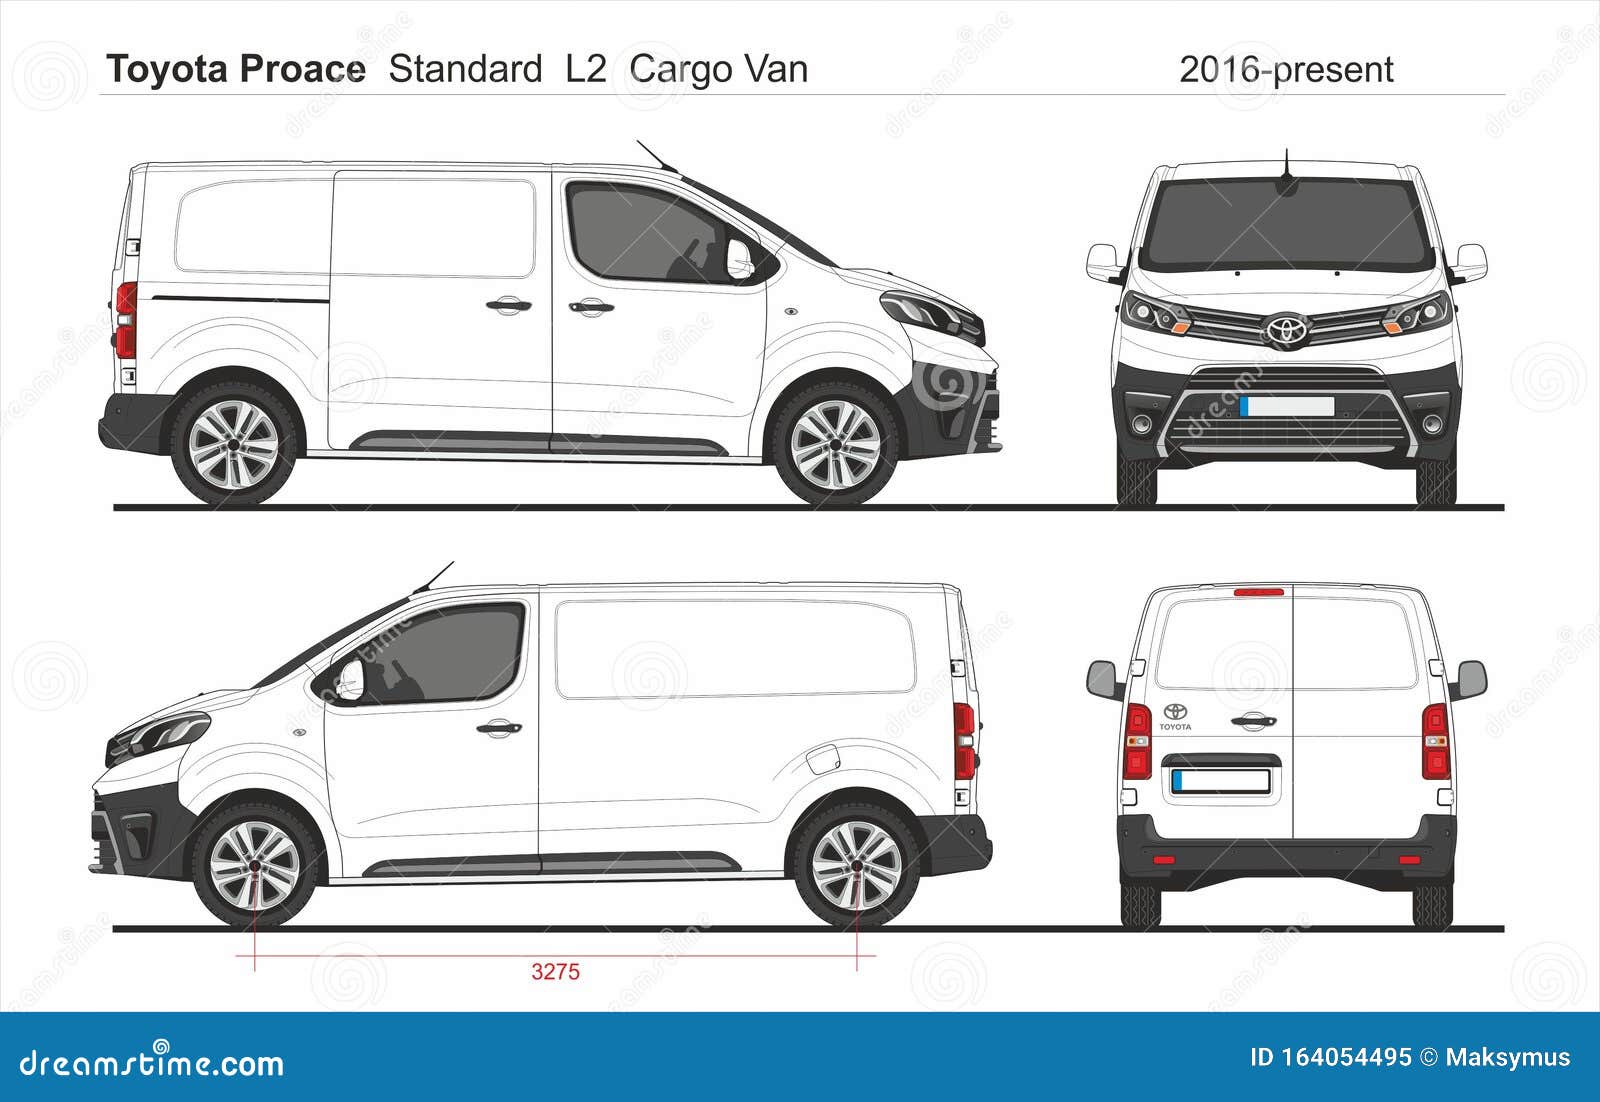 Toyota Introduces Proace Verso Electric Passenger Van